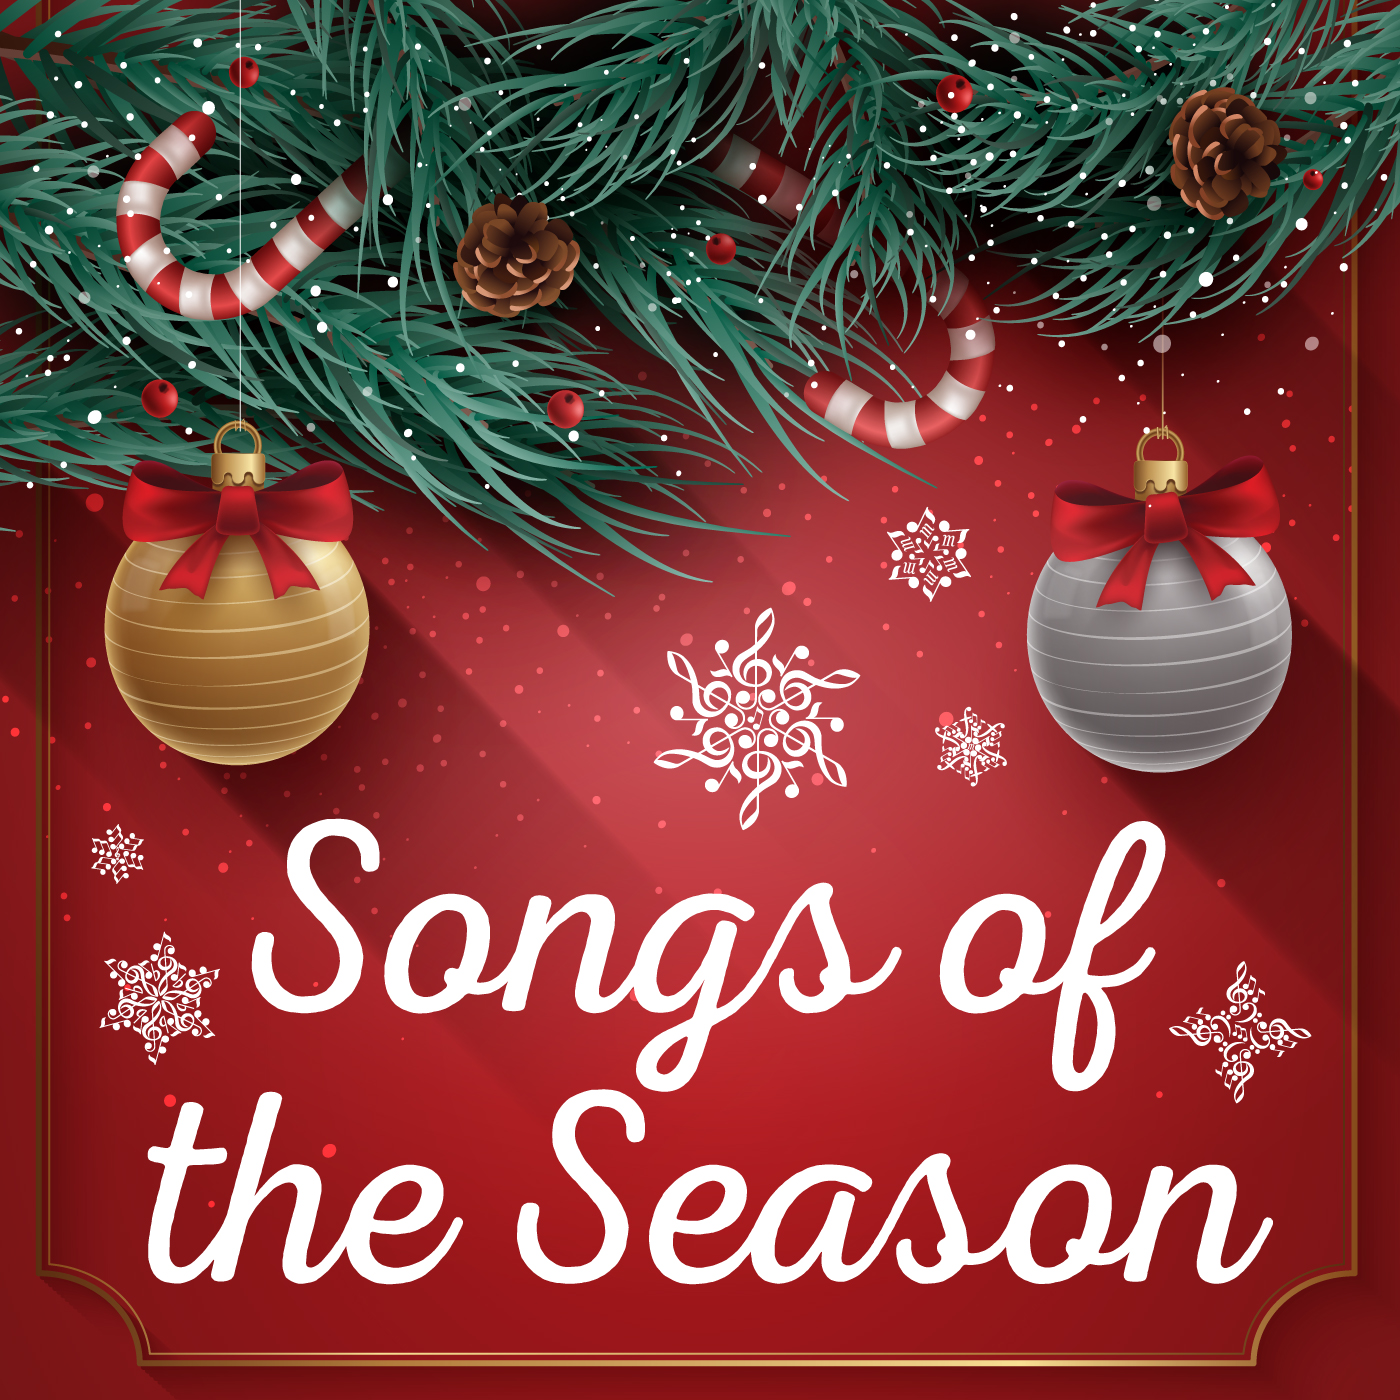 Songs Of The Season - Angel's Song - Chris Wall - 12-22-2019